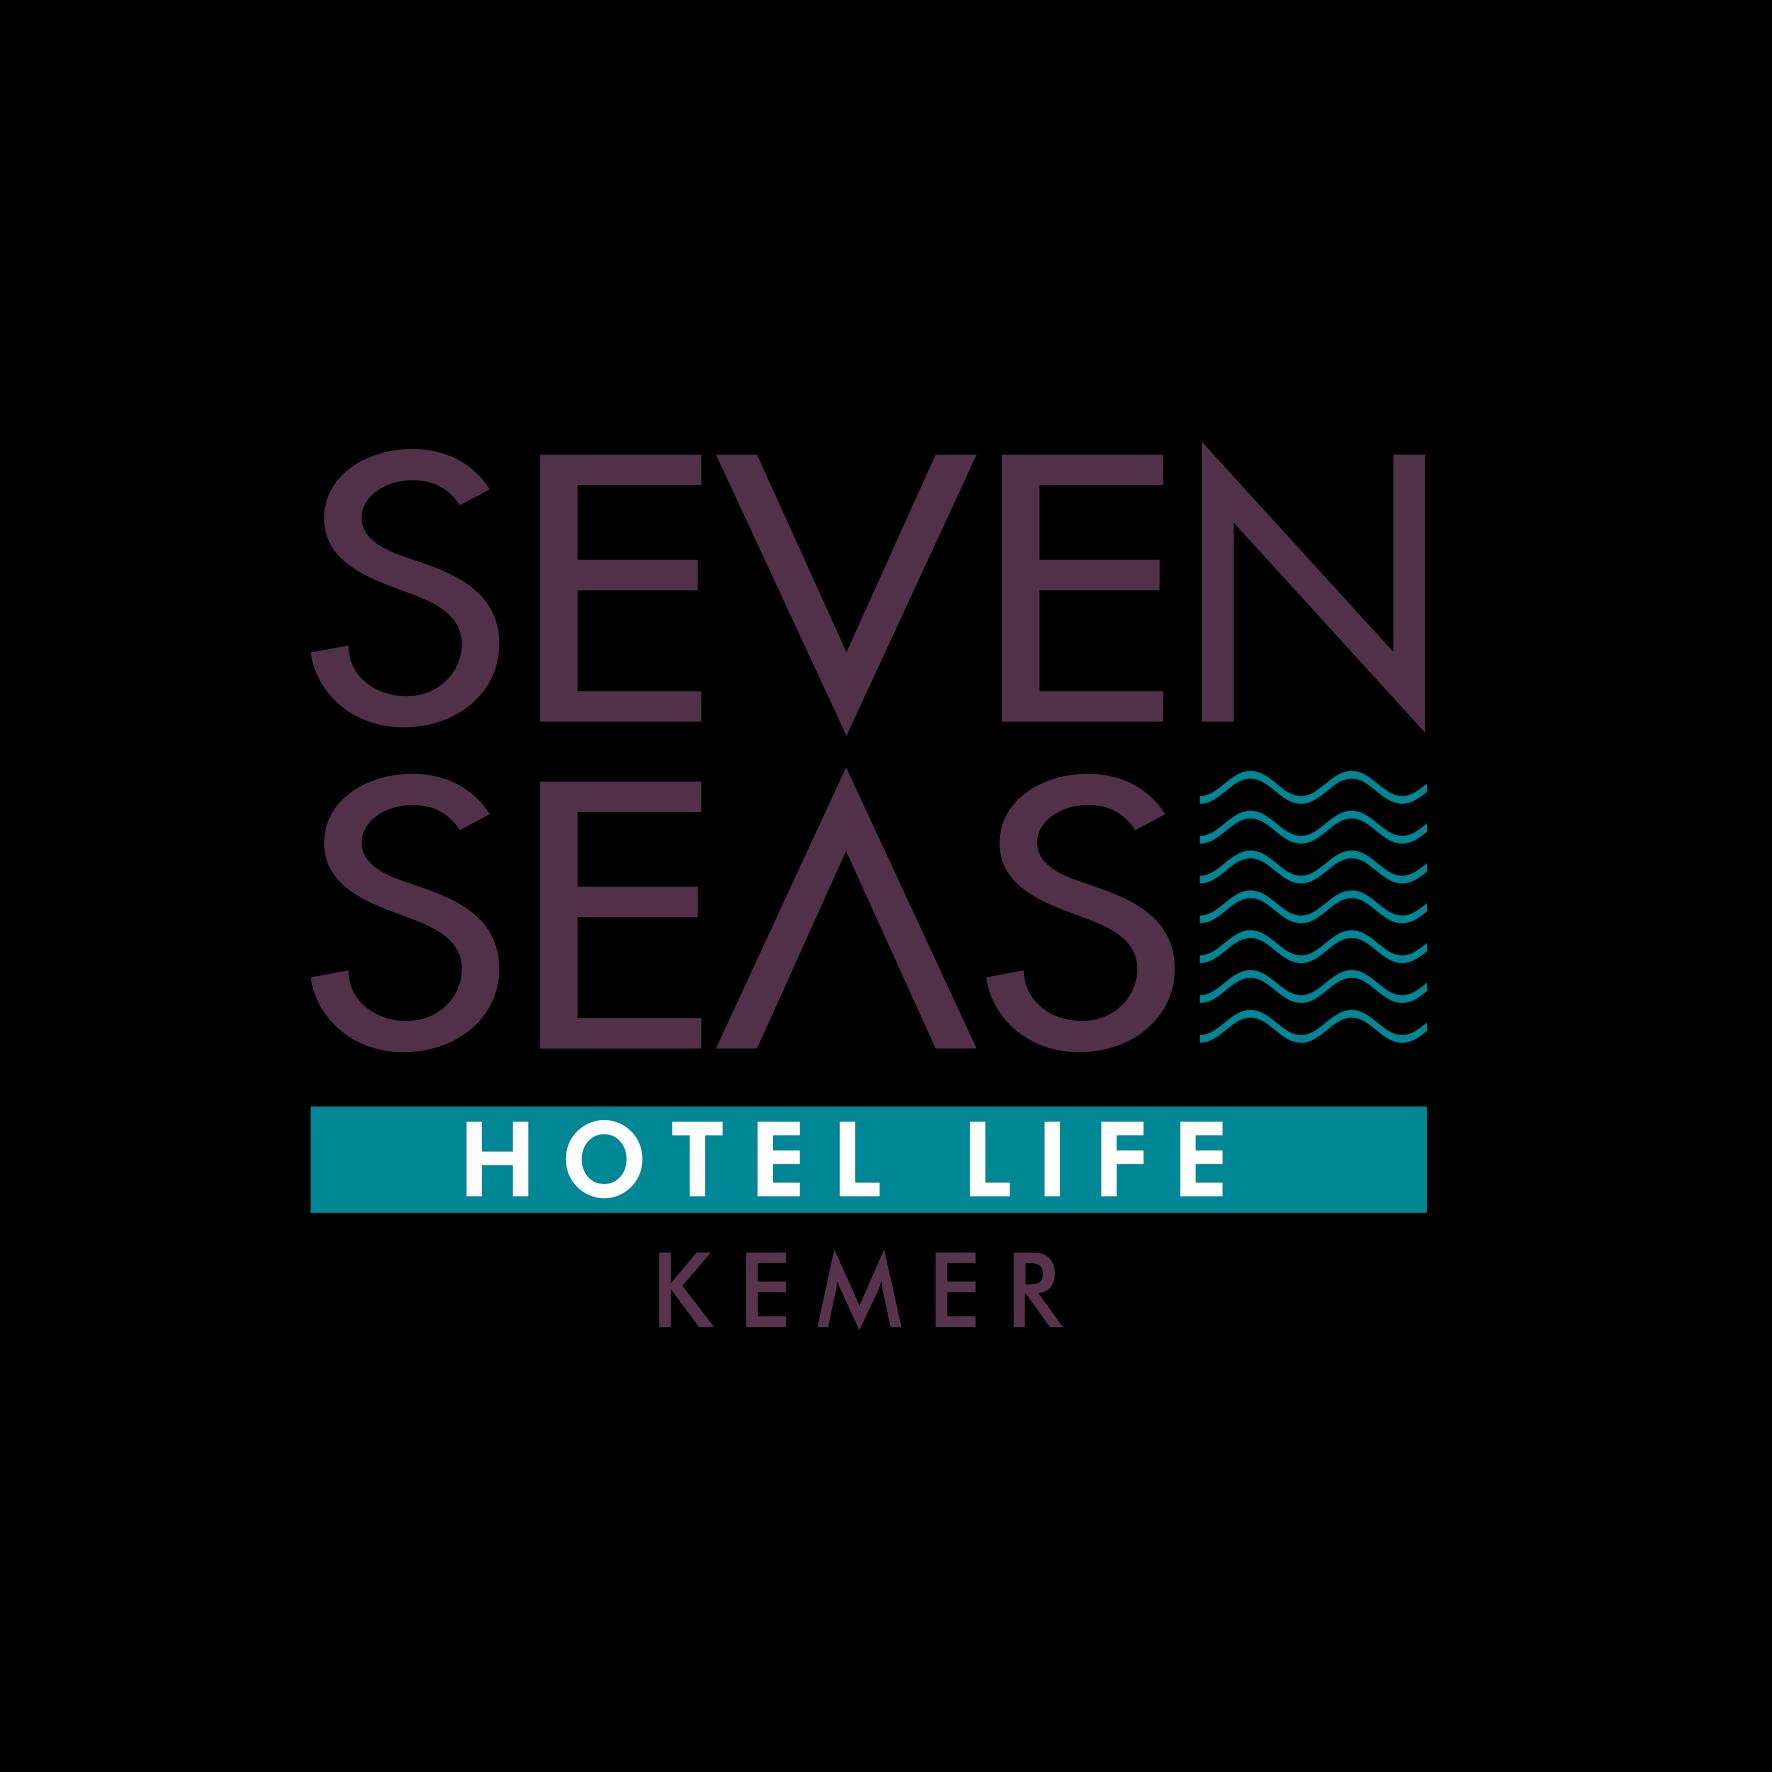 SEVEN SEAS HOTEL LIFE